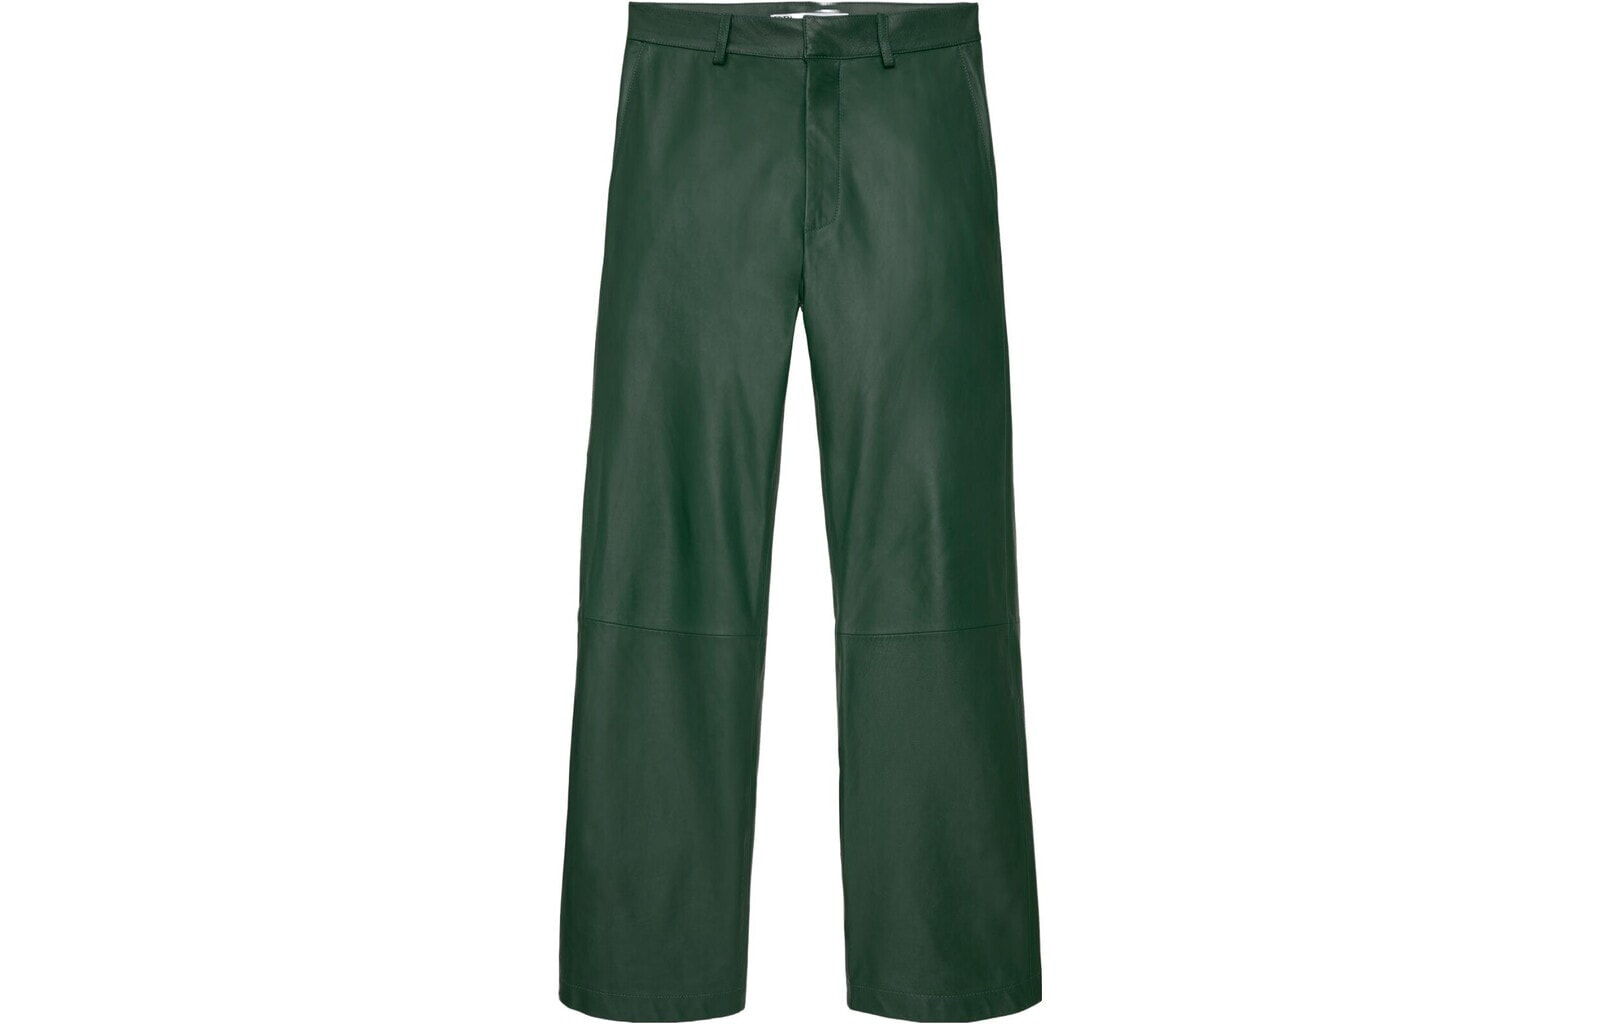 ZARA SS23 Studio系列 羊皮革皮裤休闲裤 男款 绿色 / ZARA SS23 Studio 05479601500